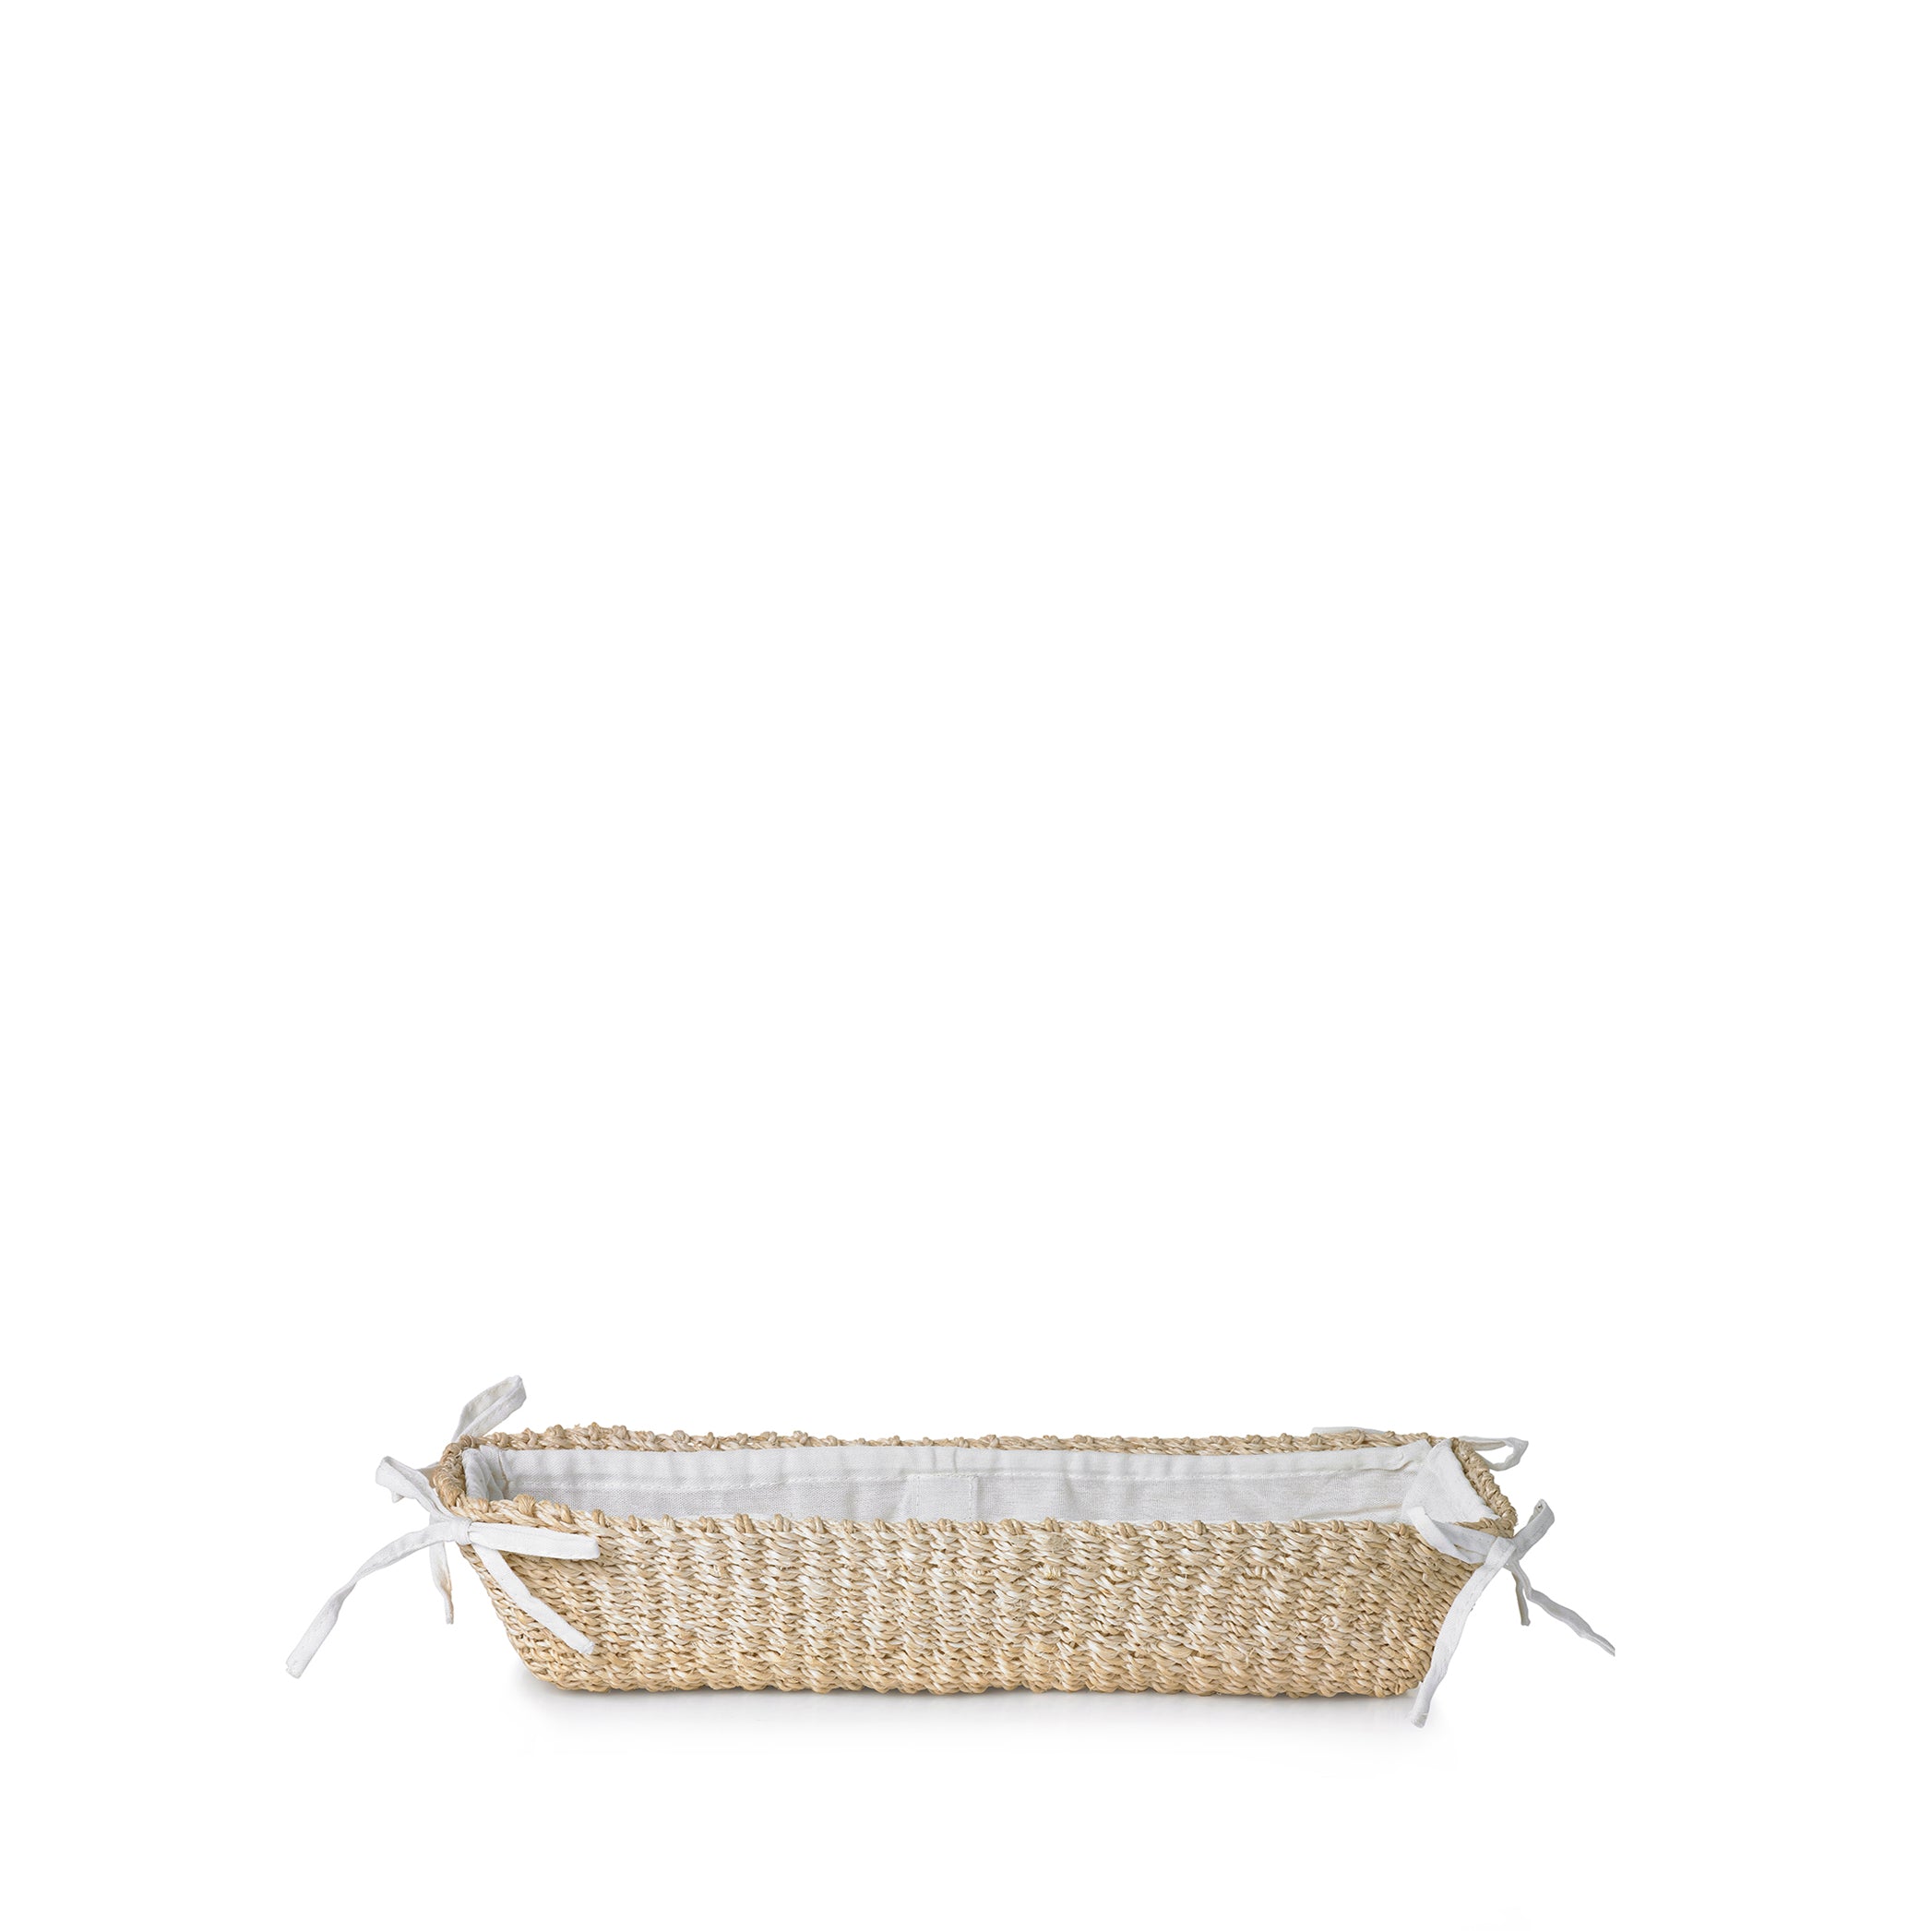 Abaca Woven Bread Basket in Cream